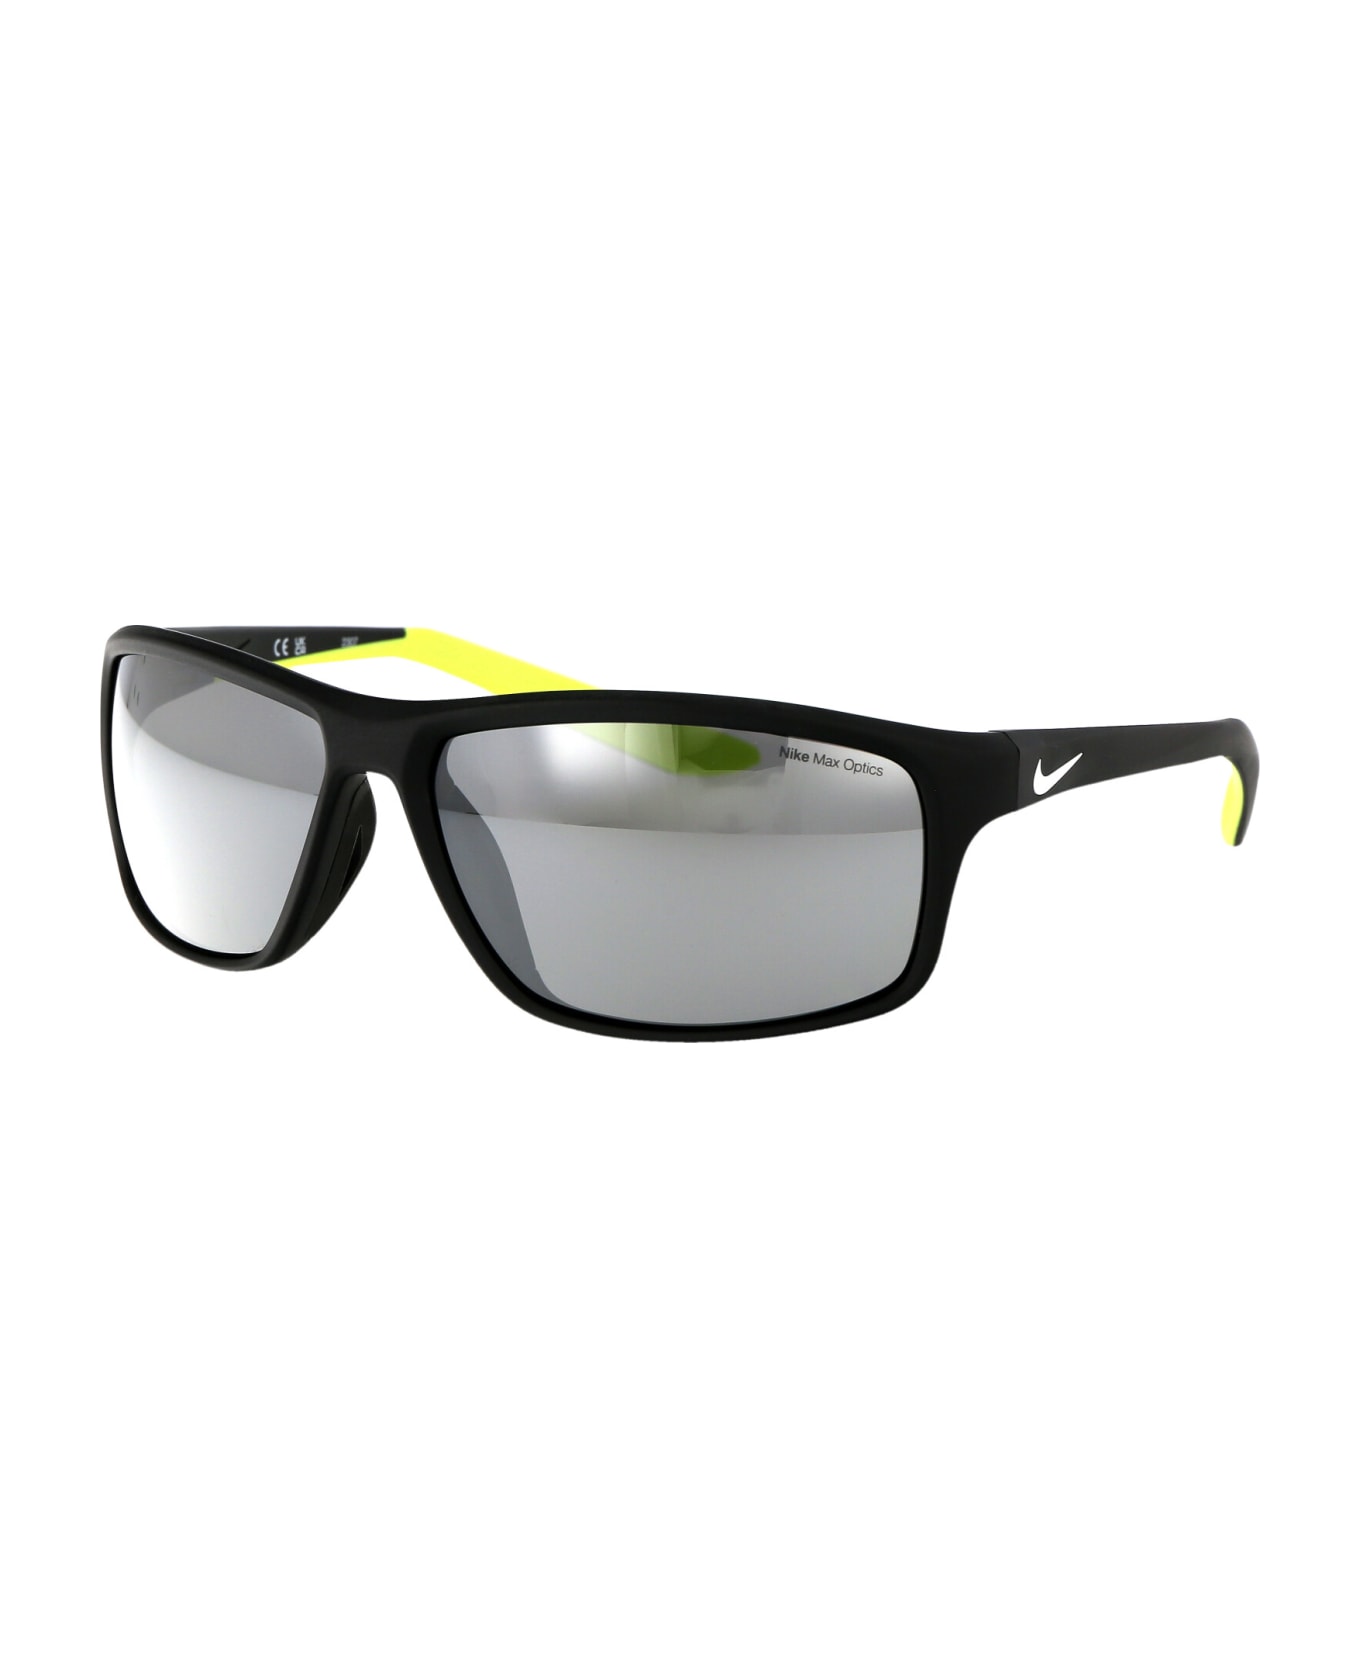 Nike Adrenaline 22 Sunglasses - 011 GRET W/ SILVER FLASH